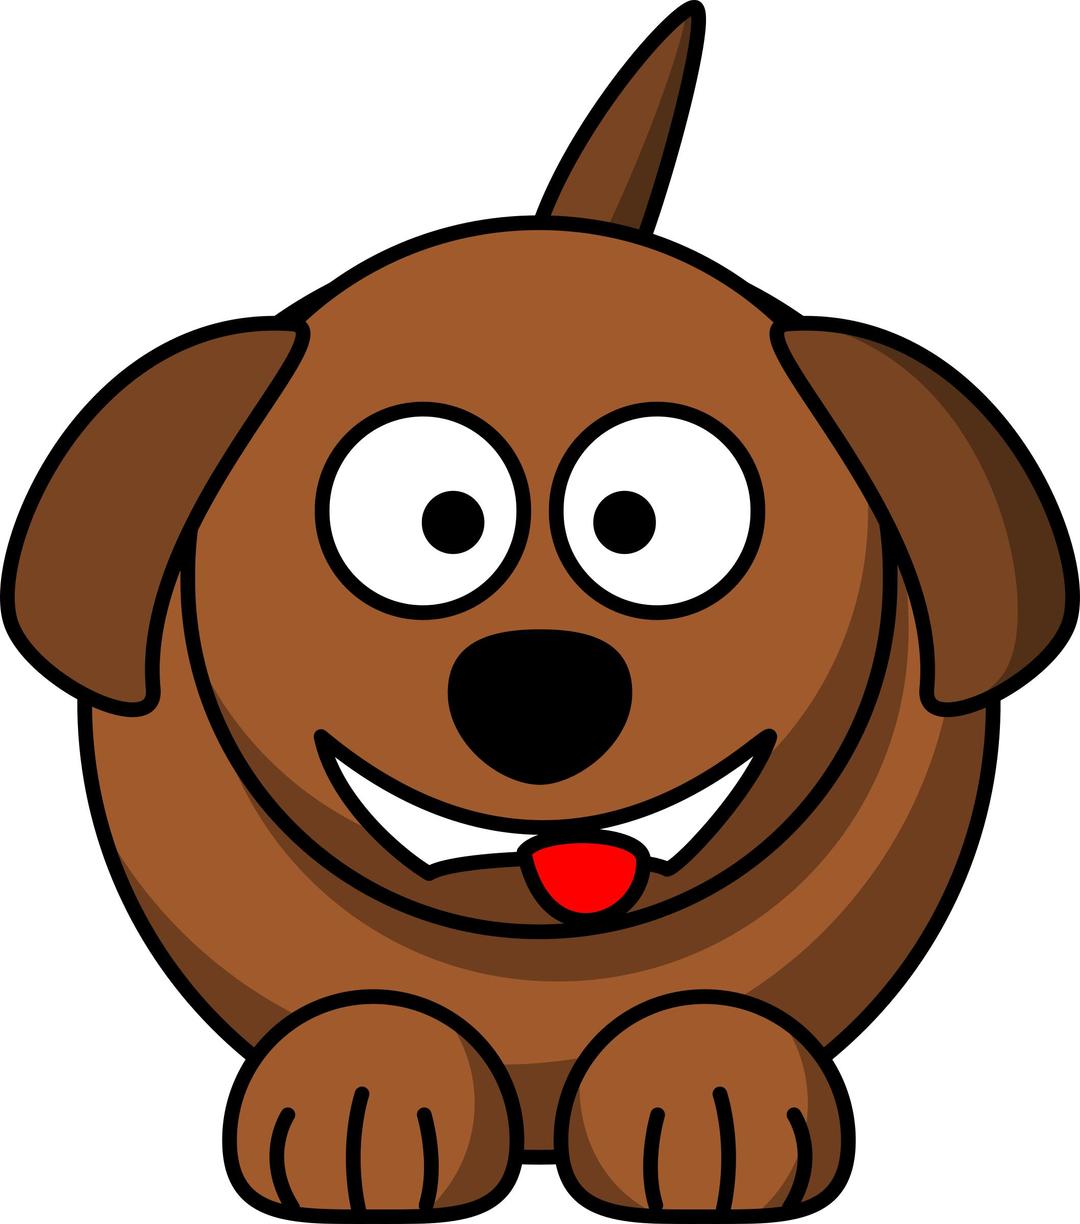 Cartoon dog laughing or smiling png transparent